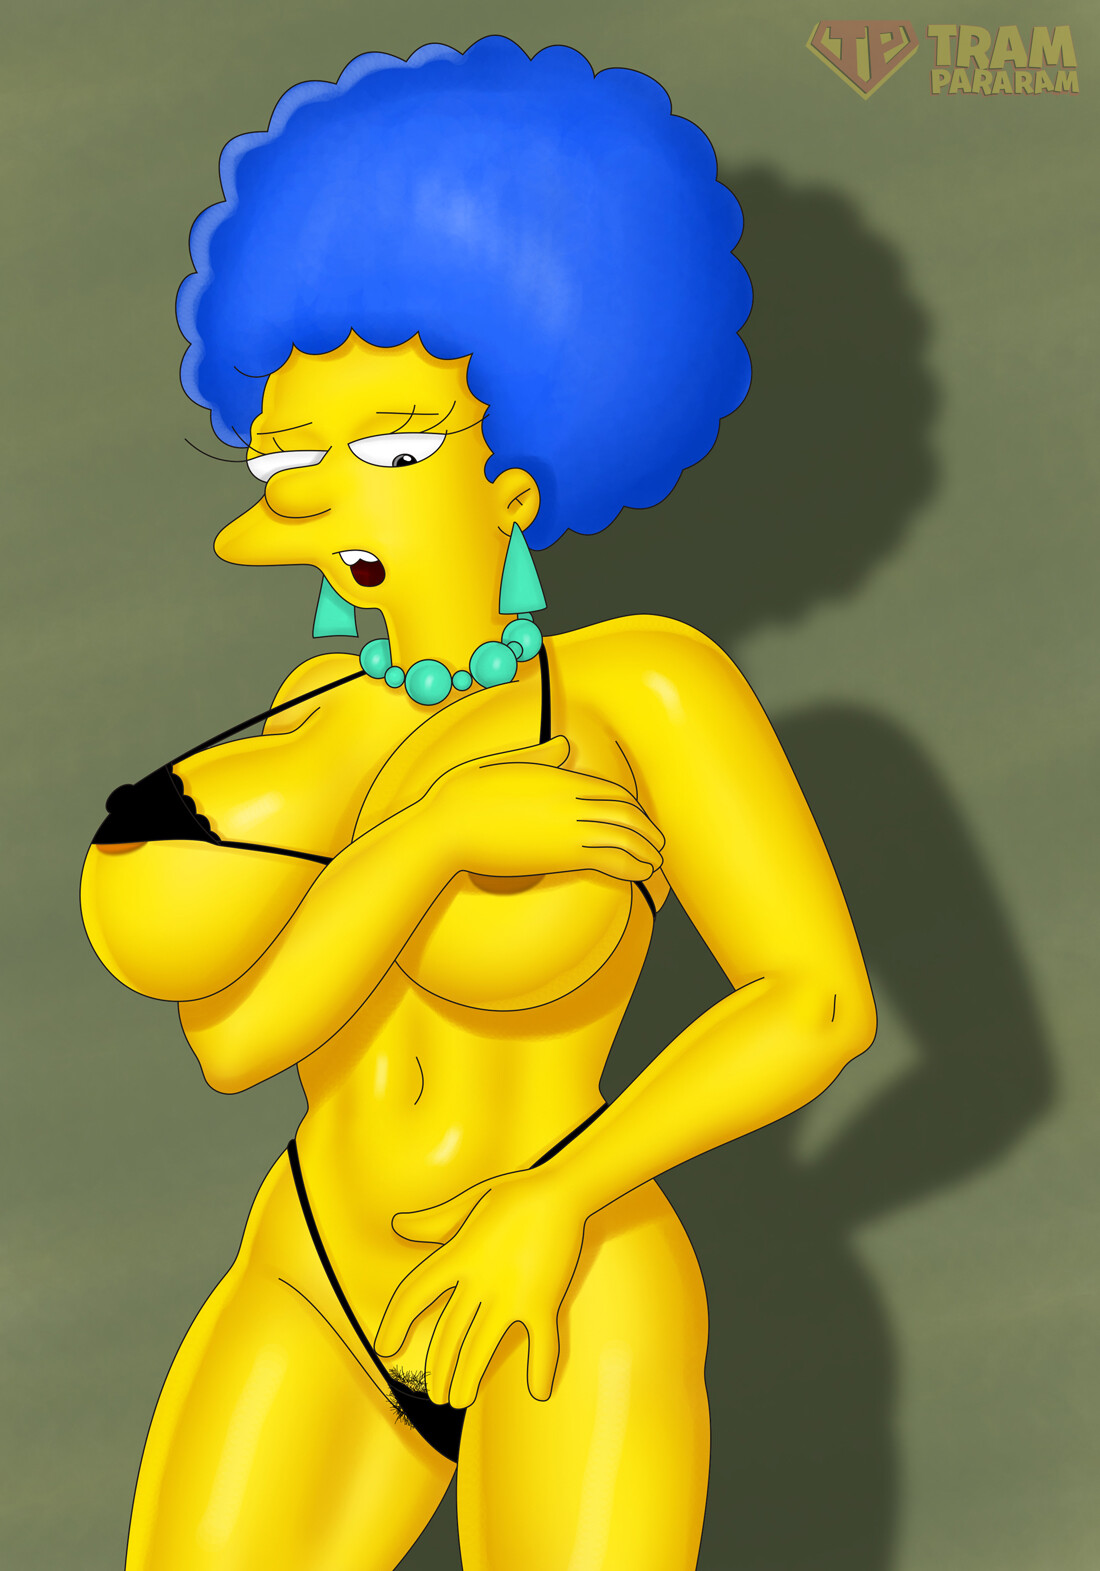 Yellow MILF with big tits in hot cartoon - Tram Pararam XXX